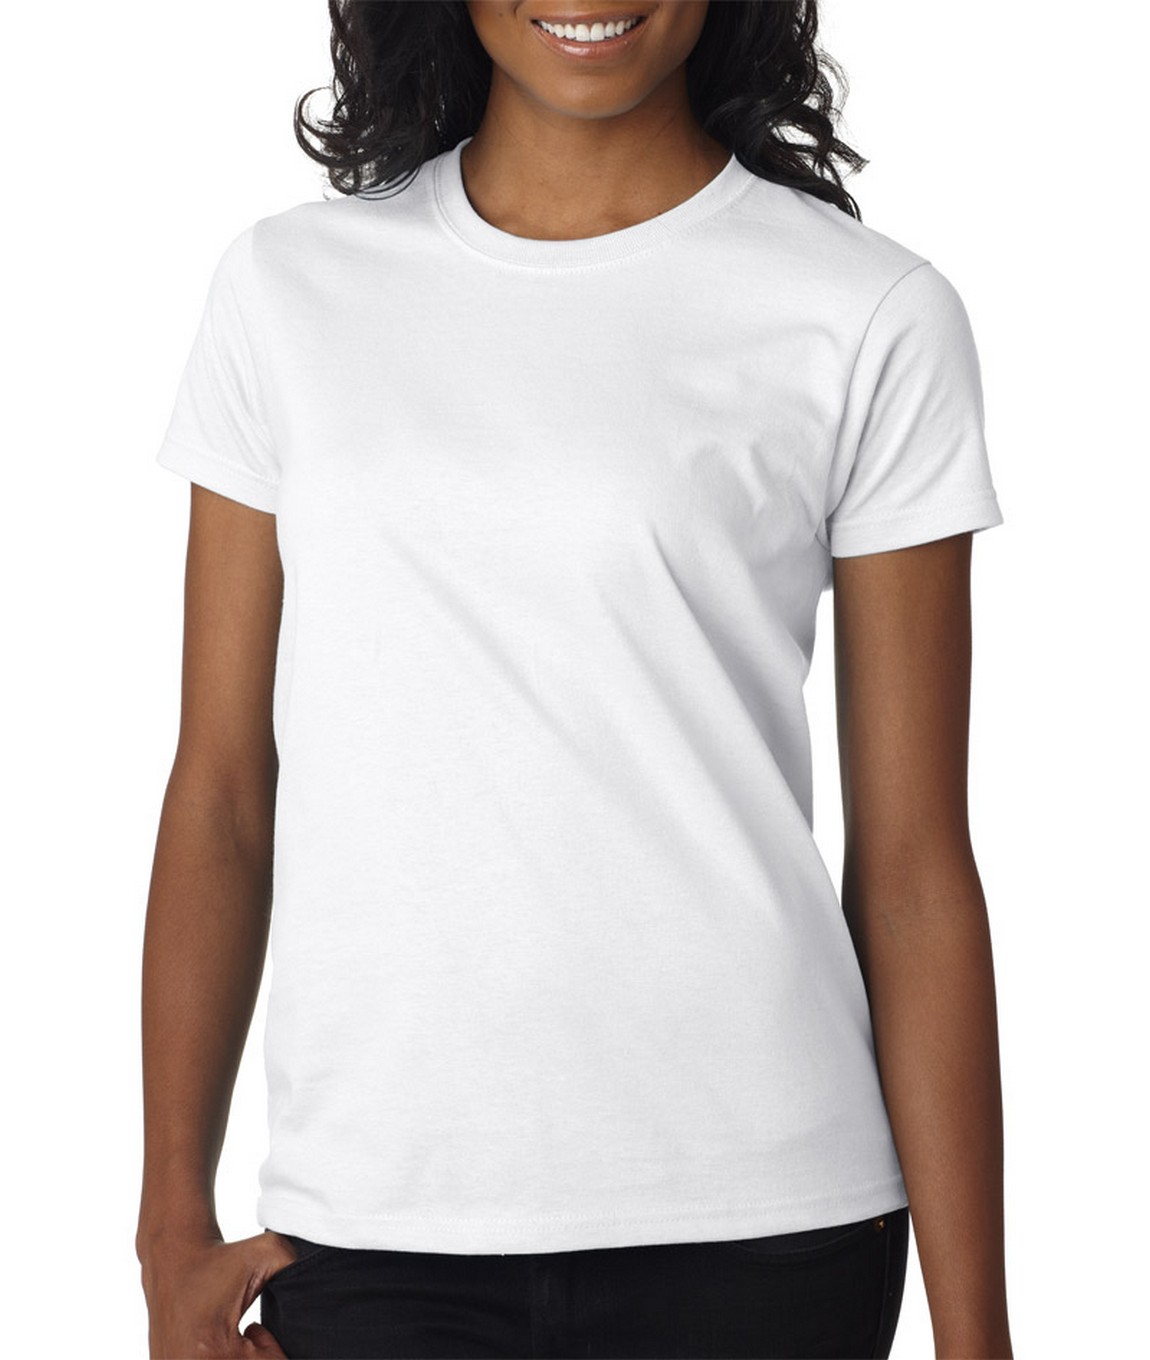 Free White T-Shirt